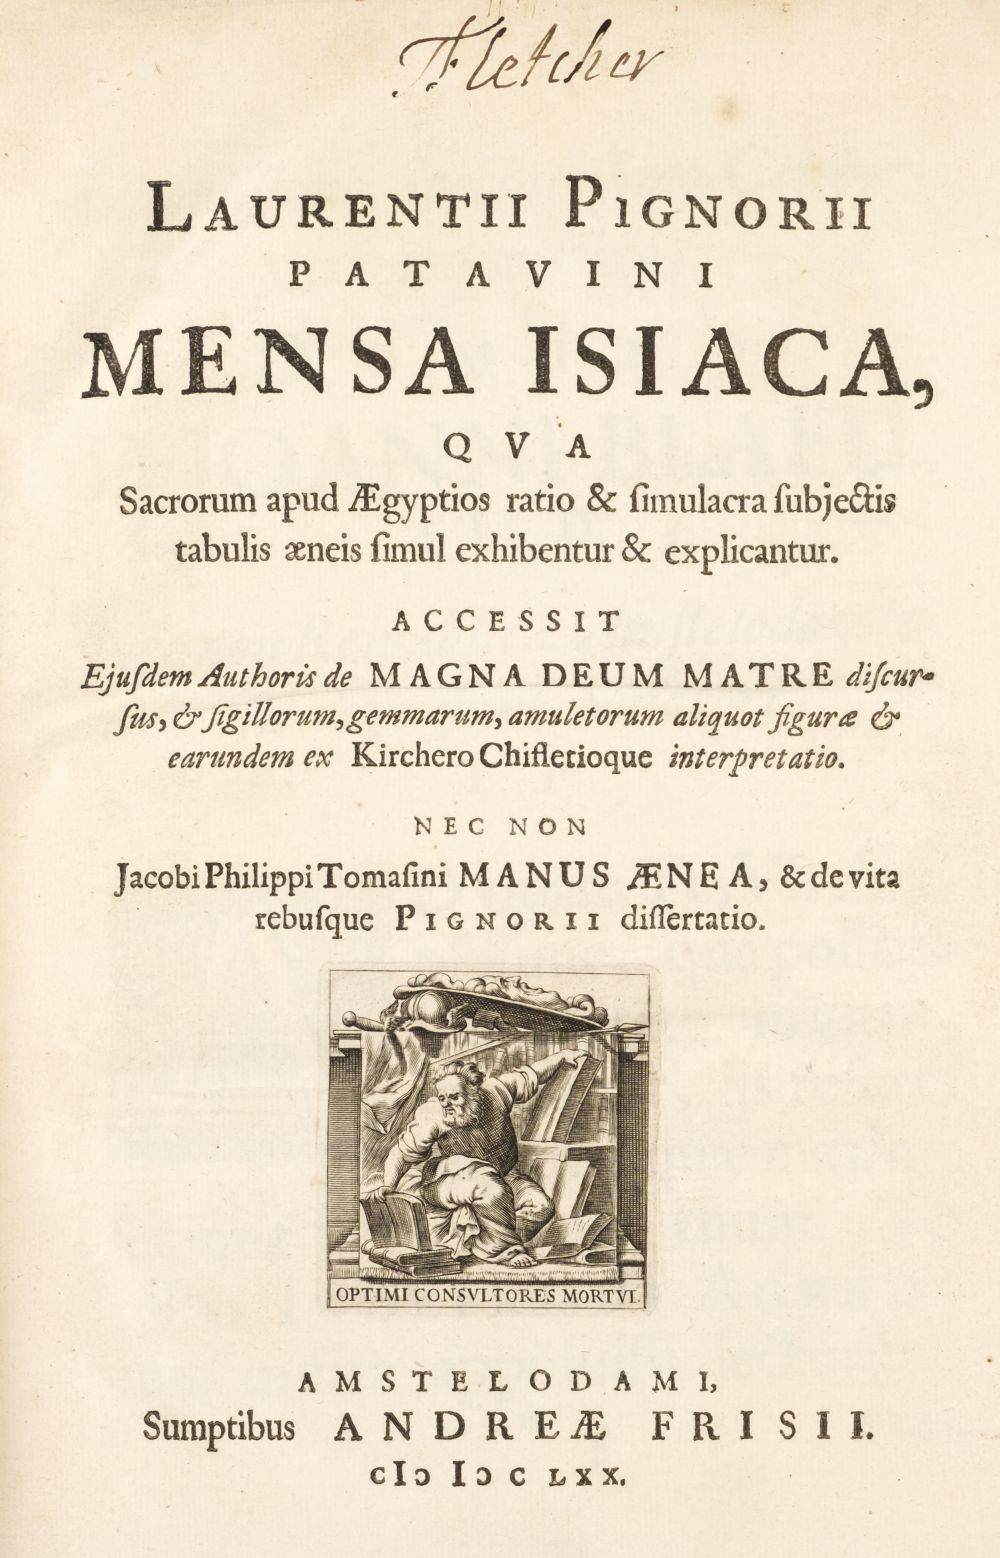 Pignoria (Lorenzo). Mensa Isiaca, 3rd edition, 1669-70, ex libris Fletcher of Saltoun